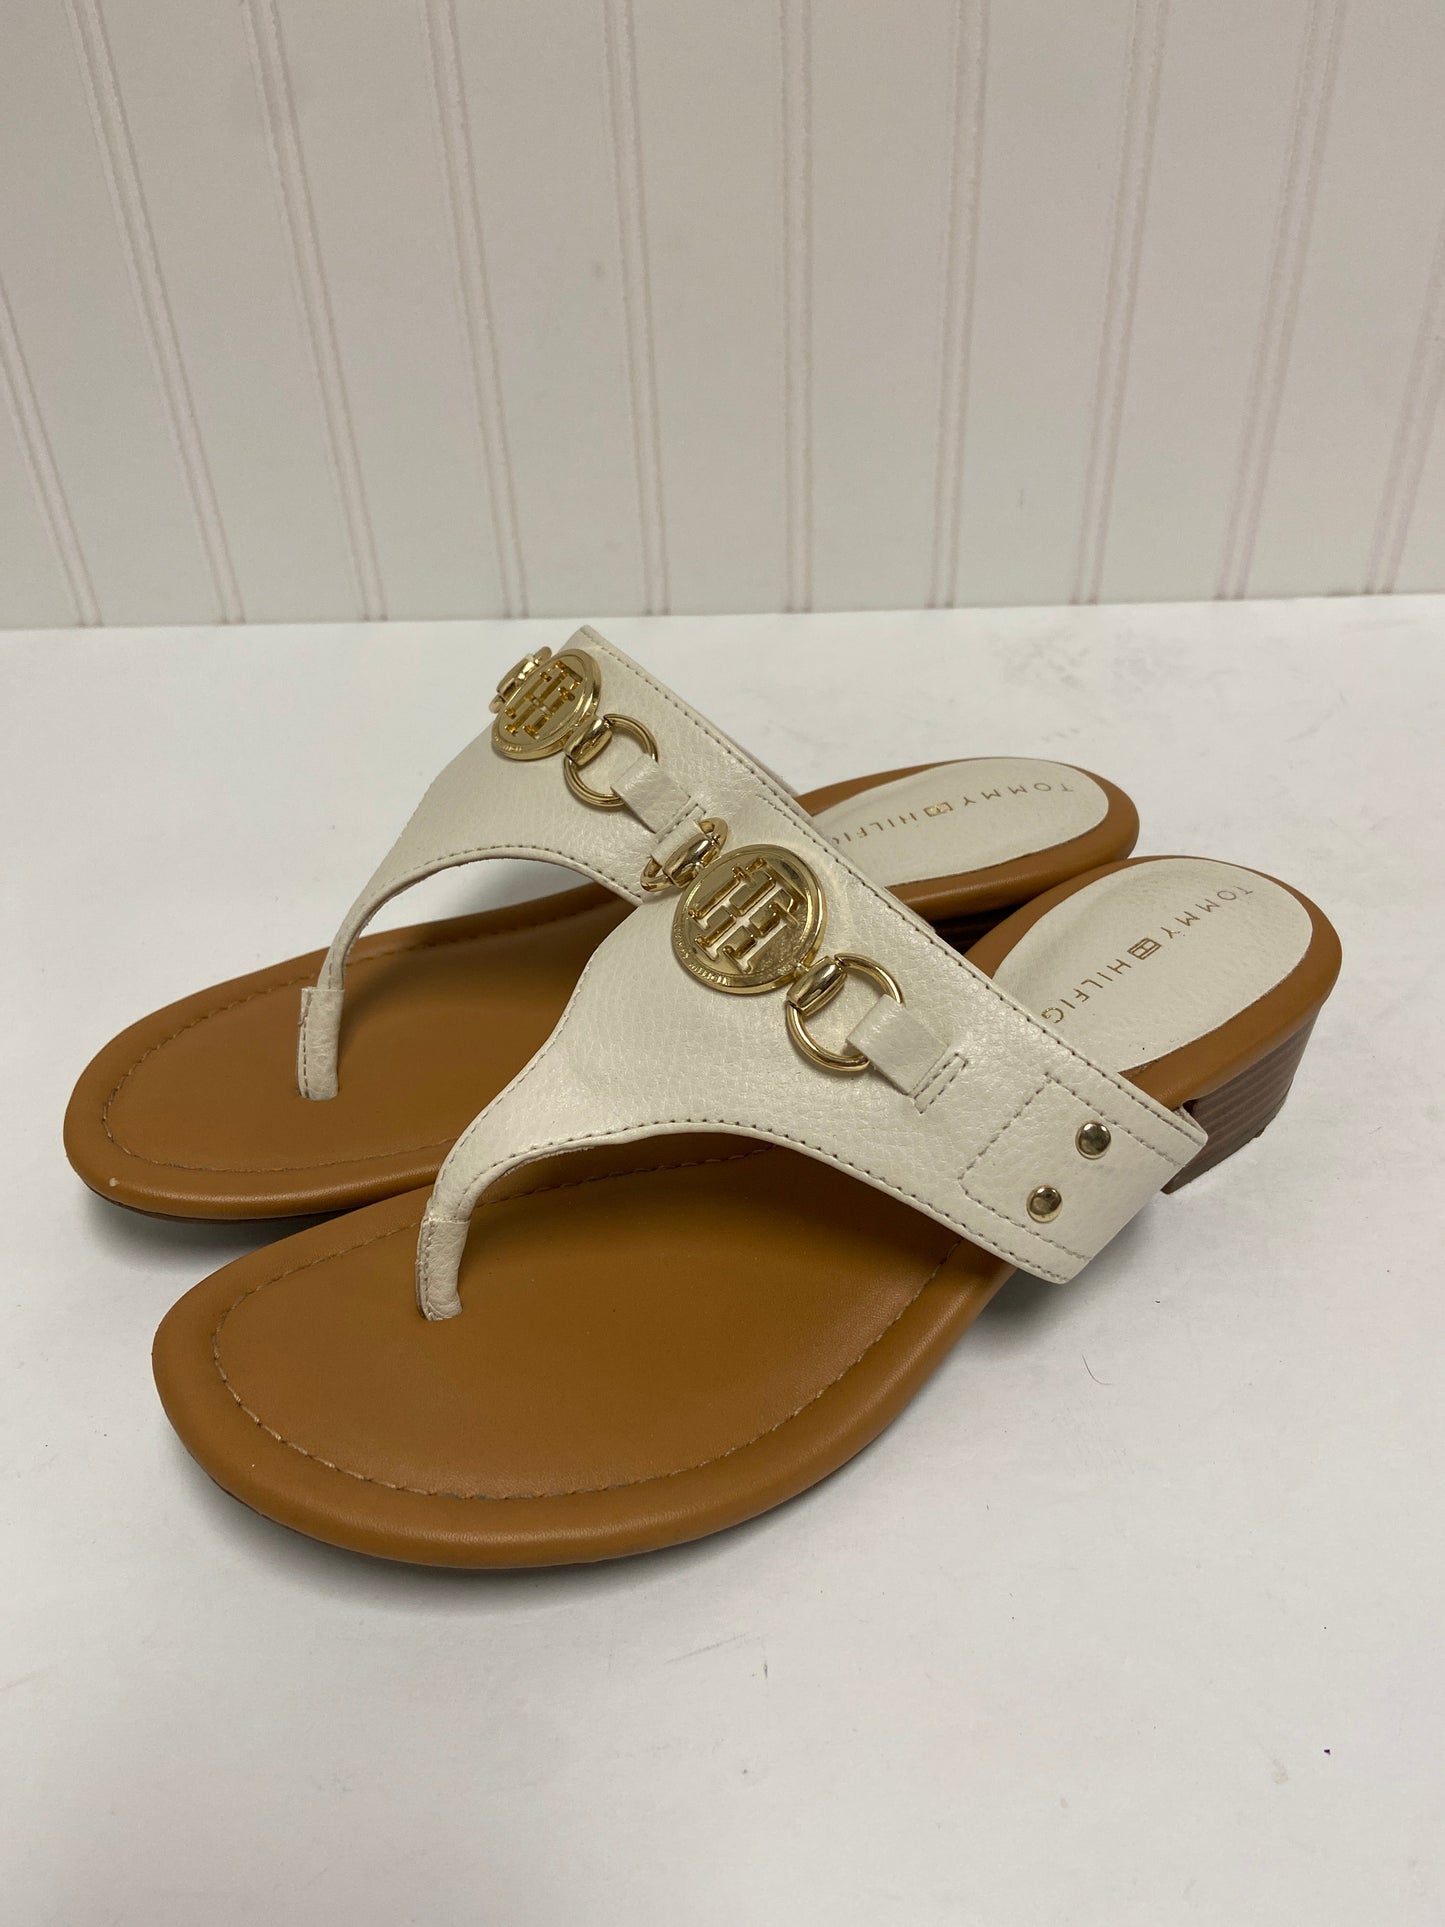 White Sandals Heels Block Tommy Hilfiger, Size 7